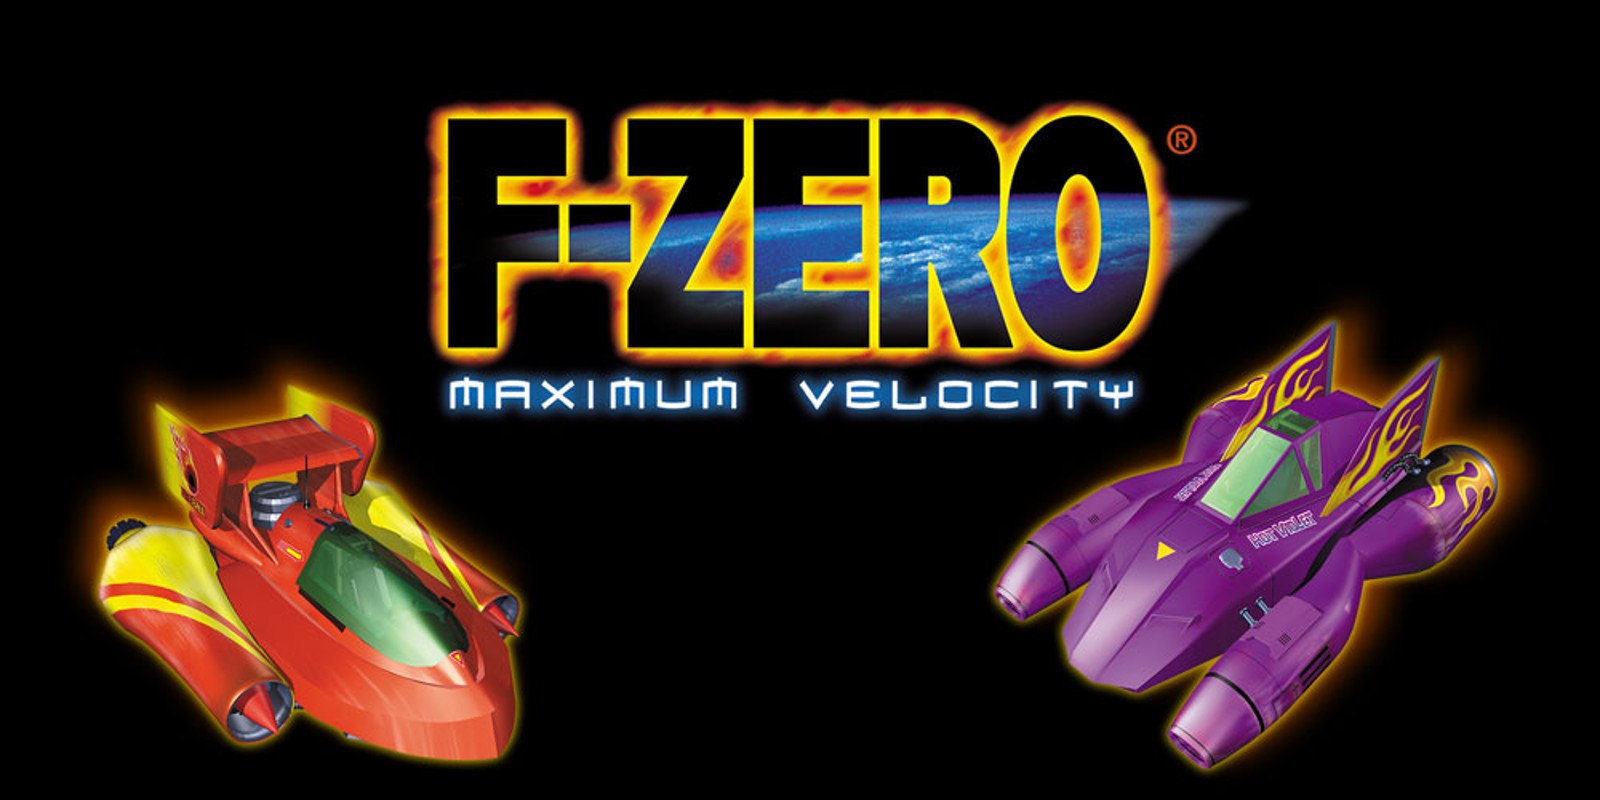 best driving games ranked - F-Zero Maximum Velocity